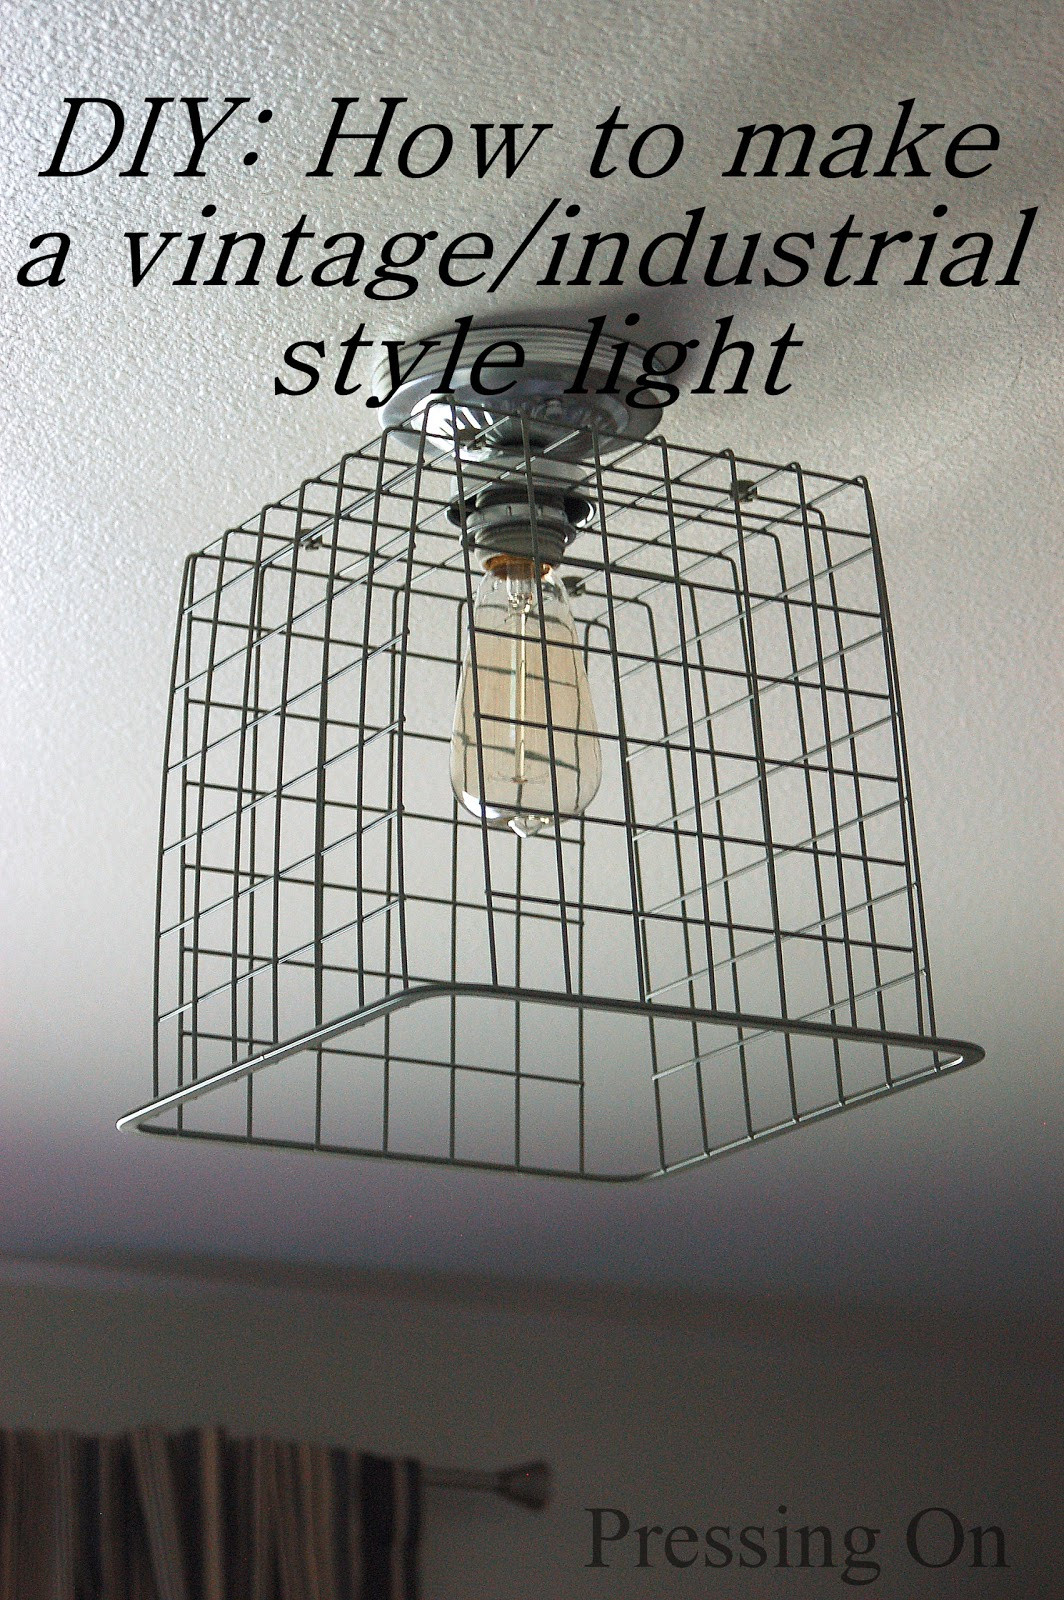 DIY Ceiling Light Cover
 Pressing DIY Vintage Industrial Style Ceiling Light